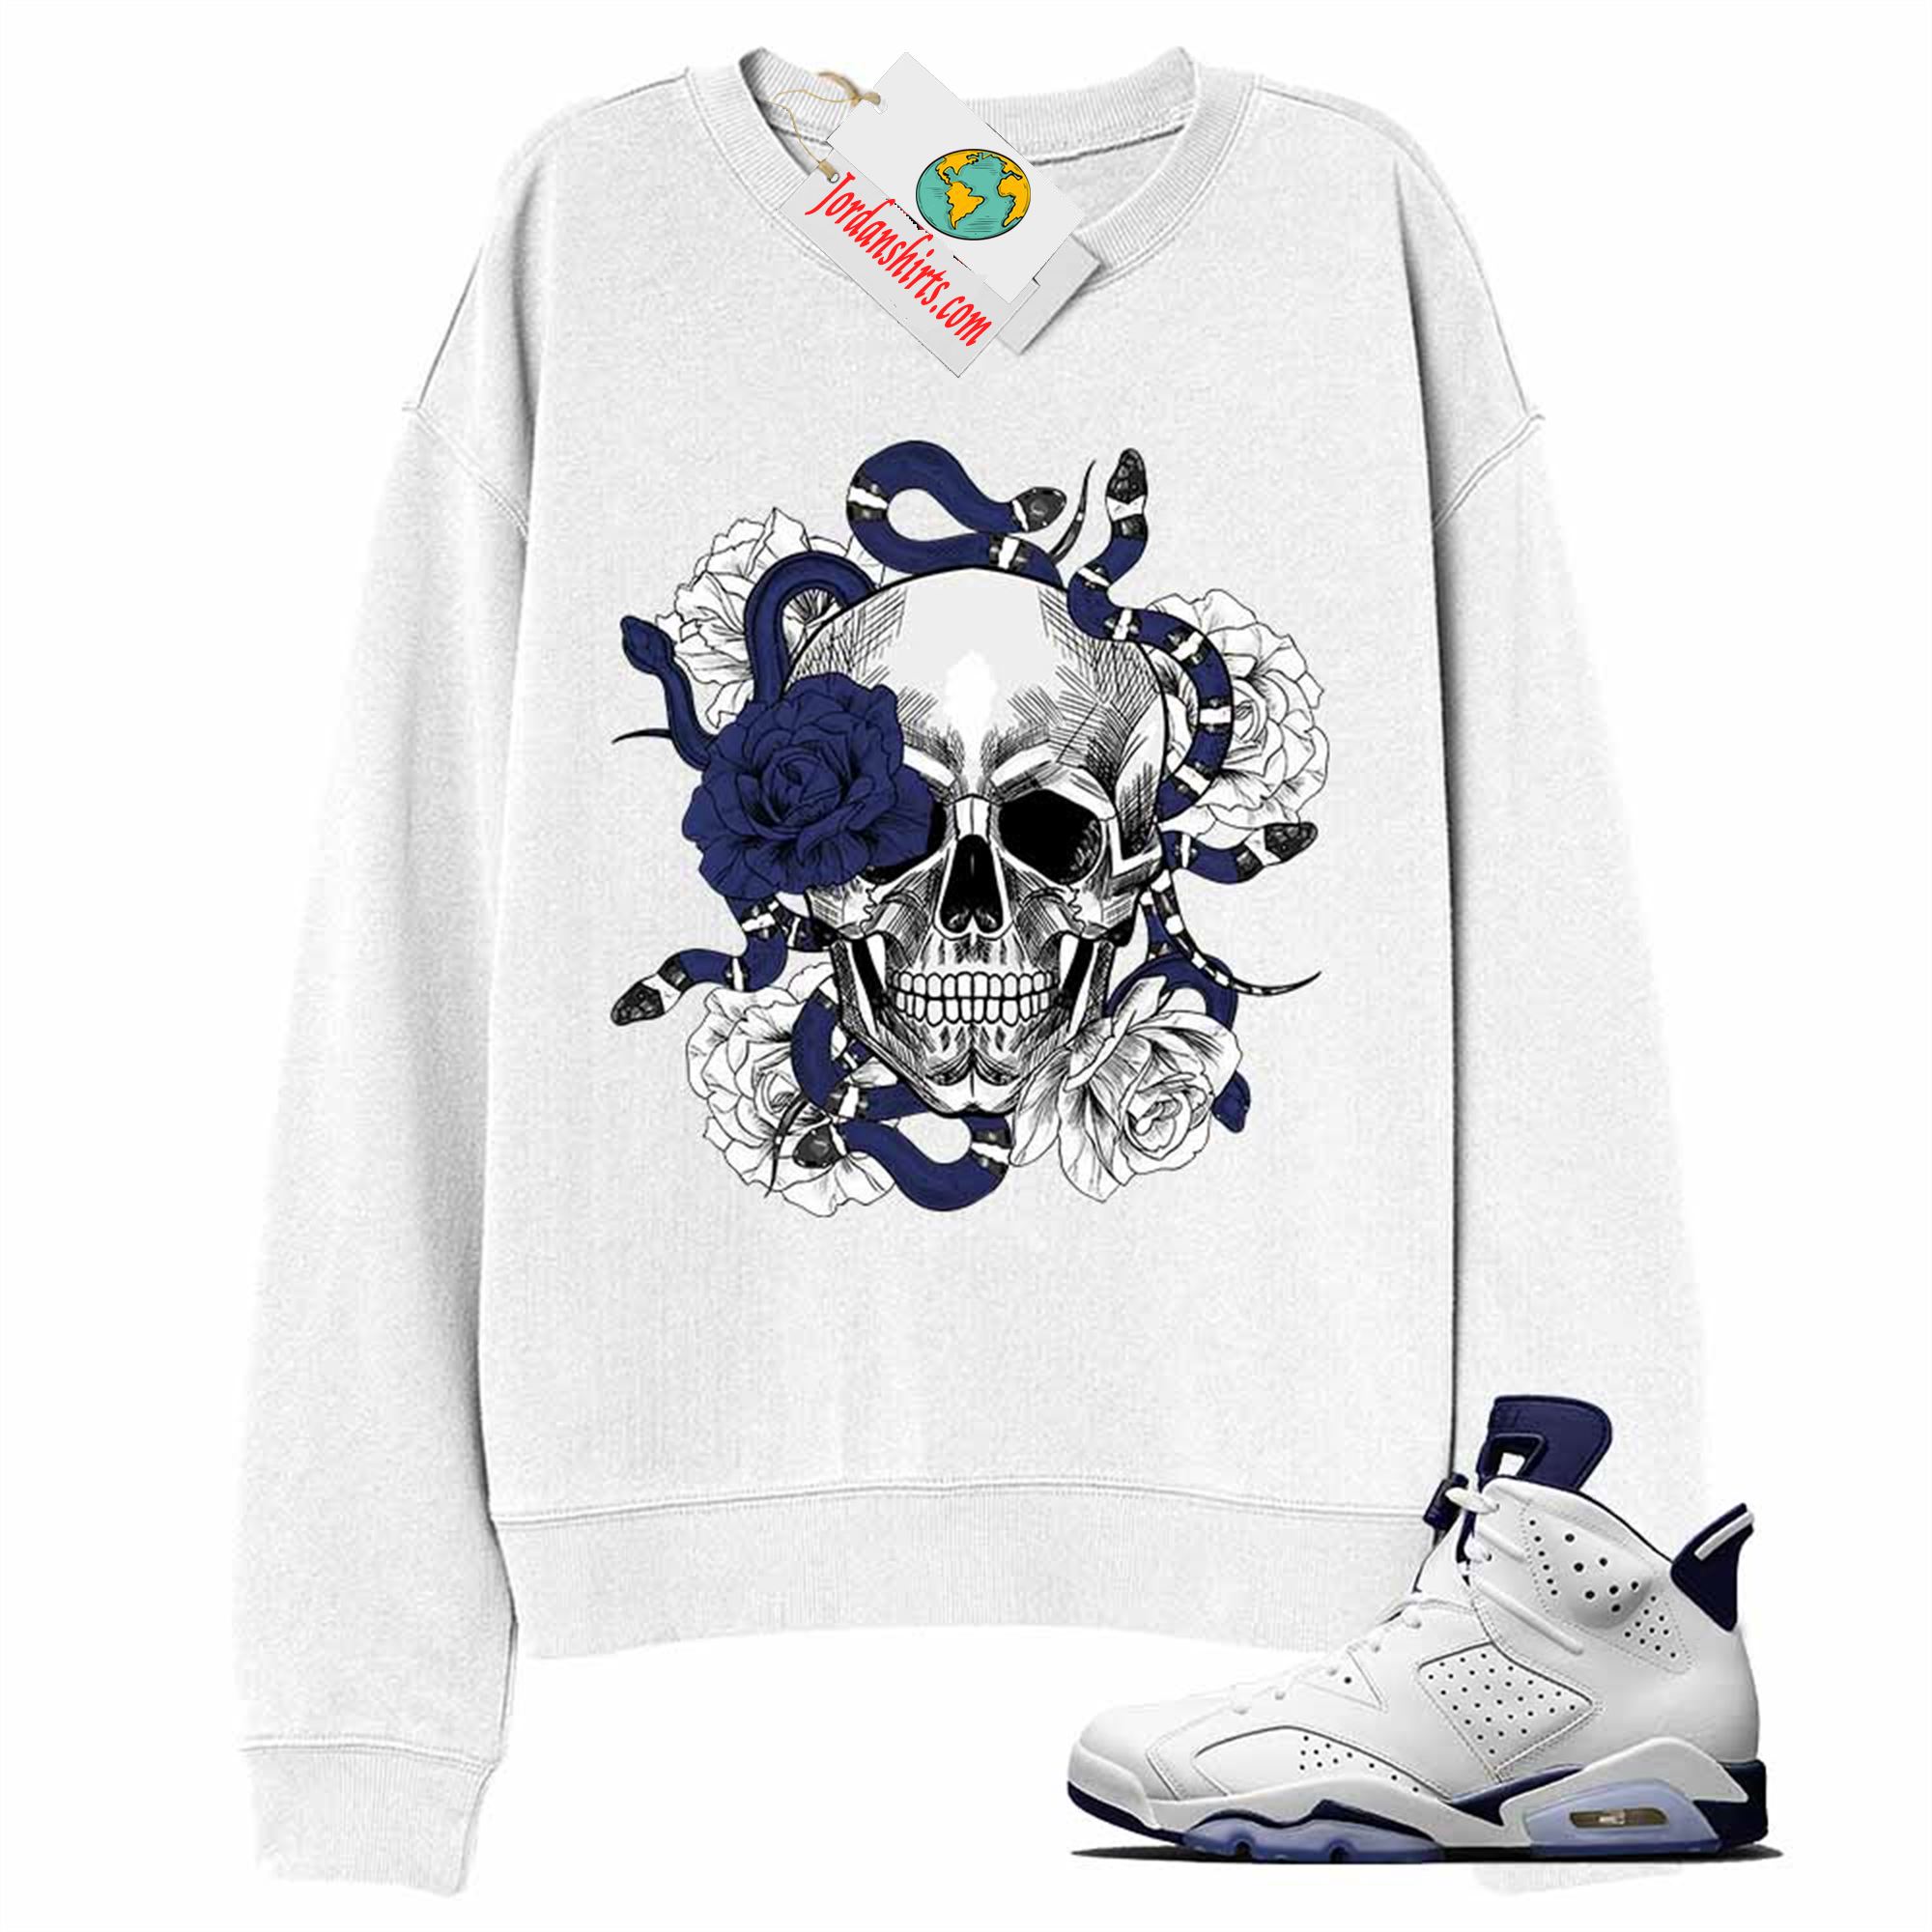 Jordan 6 Sweatshirt, Snake Skull Rose White Sweatshirt Air Jordan 6 Midnight Navy 6s Size Up To 5xl